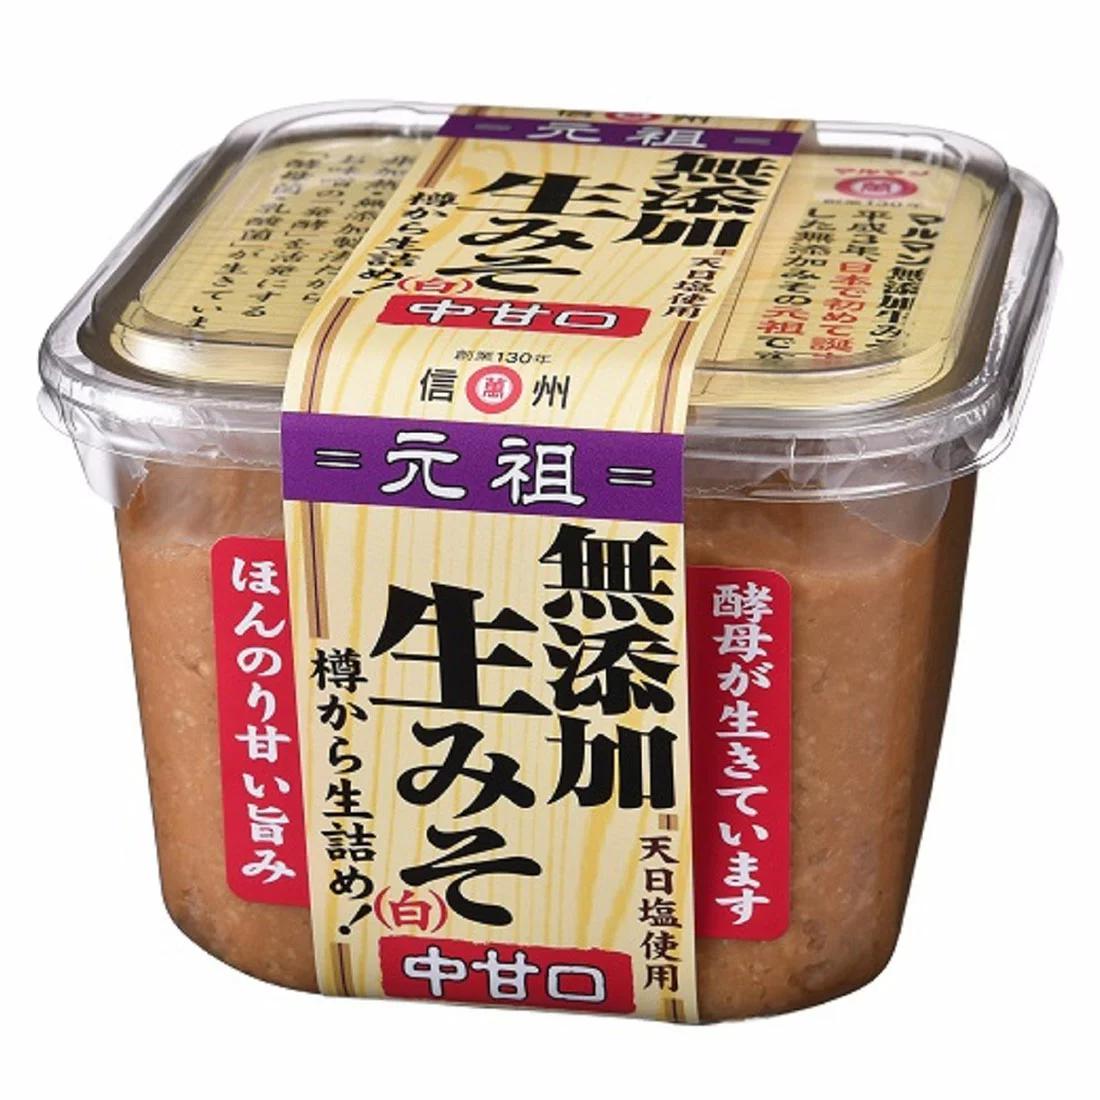 Maruman Mutenka Natural Nama Shiro White Miso Paste 750g – Japanese Taste